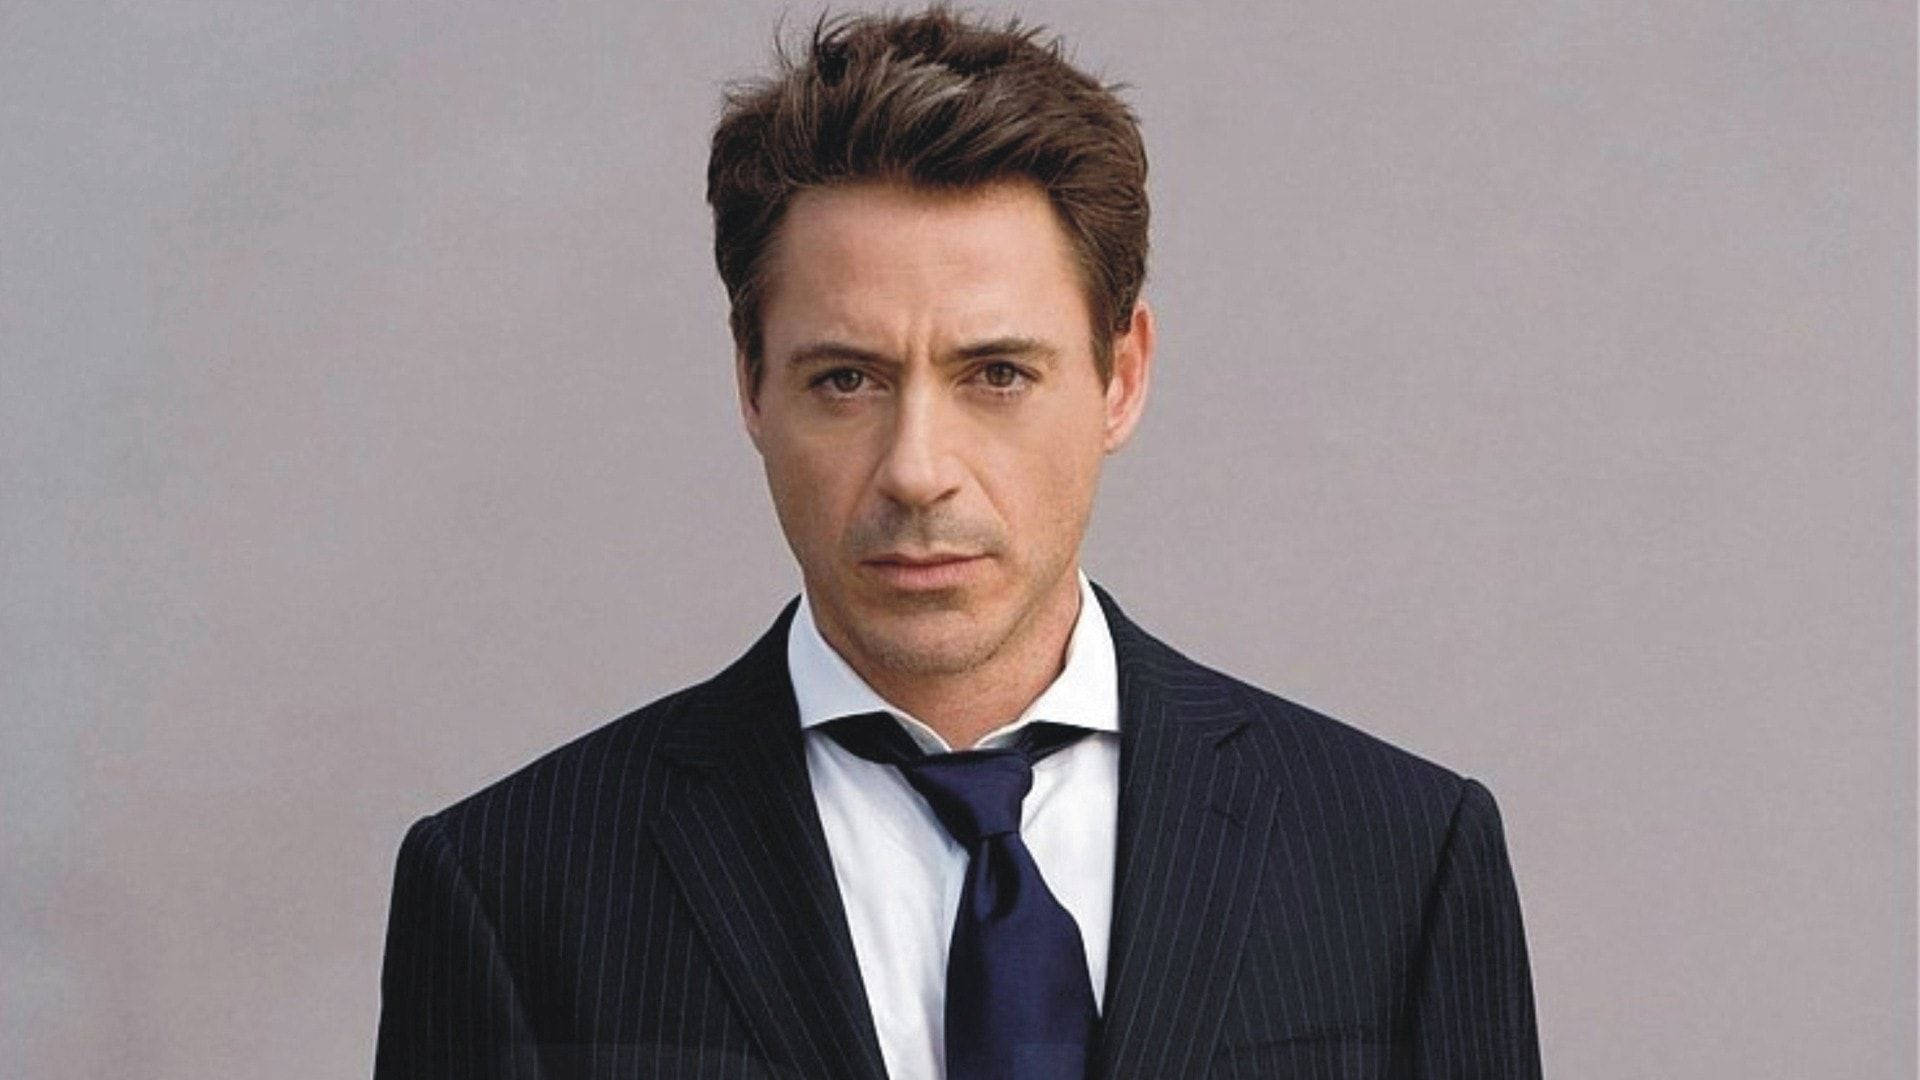 Blue Tie Robert Downey Jr.